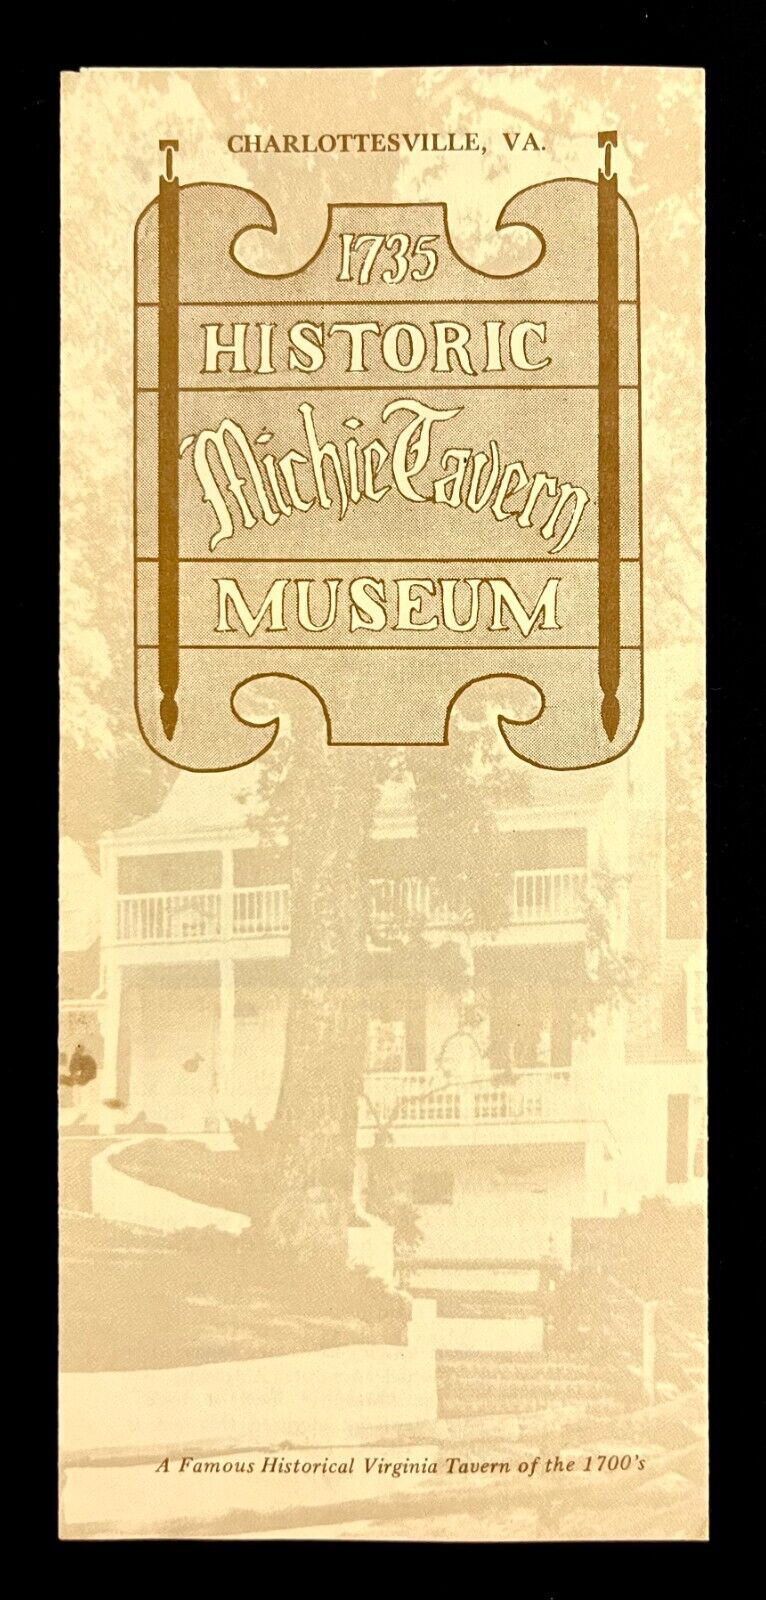 1970s Historic Michie Tavern Museum Charlottesville VA Vintage Travel Brochure